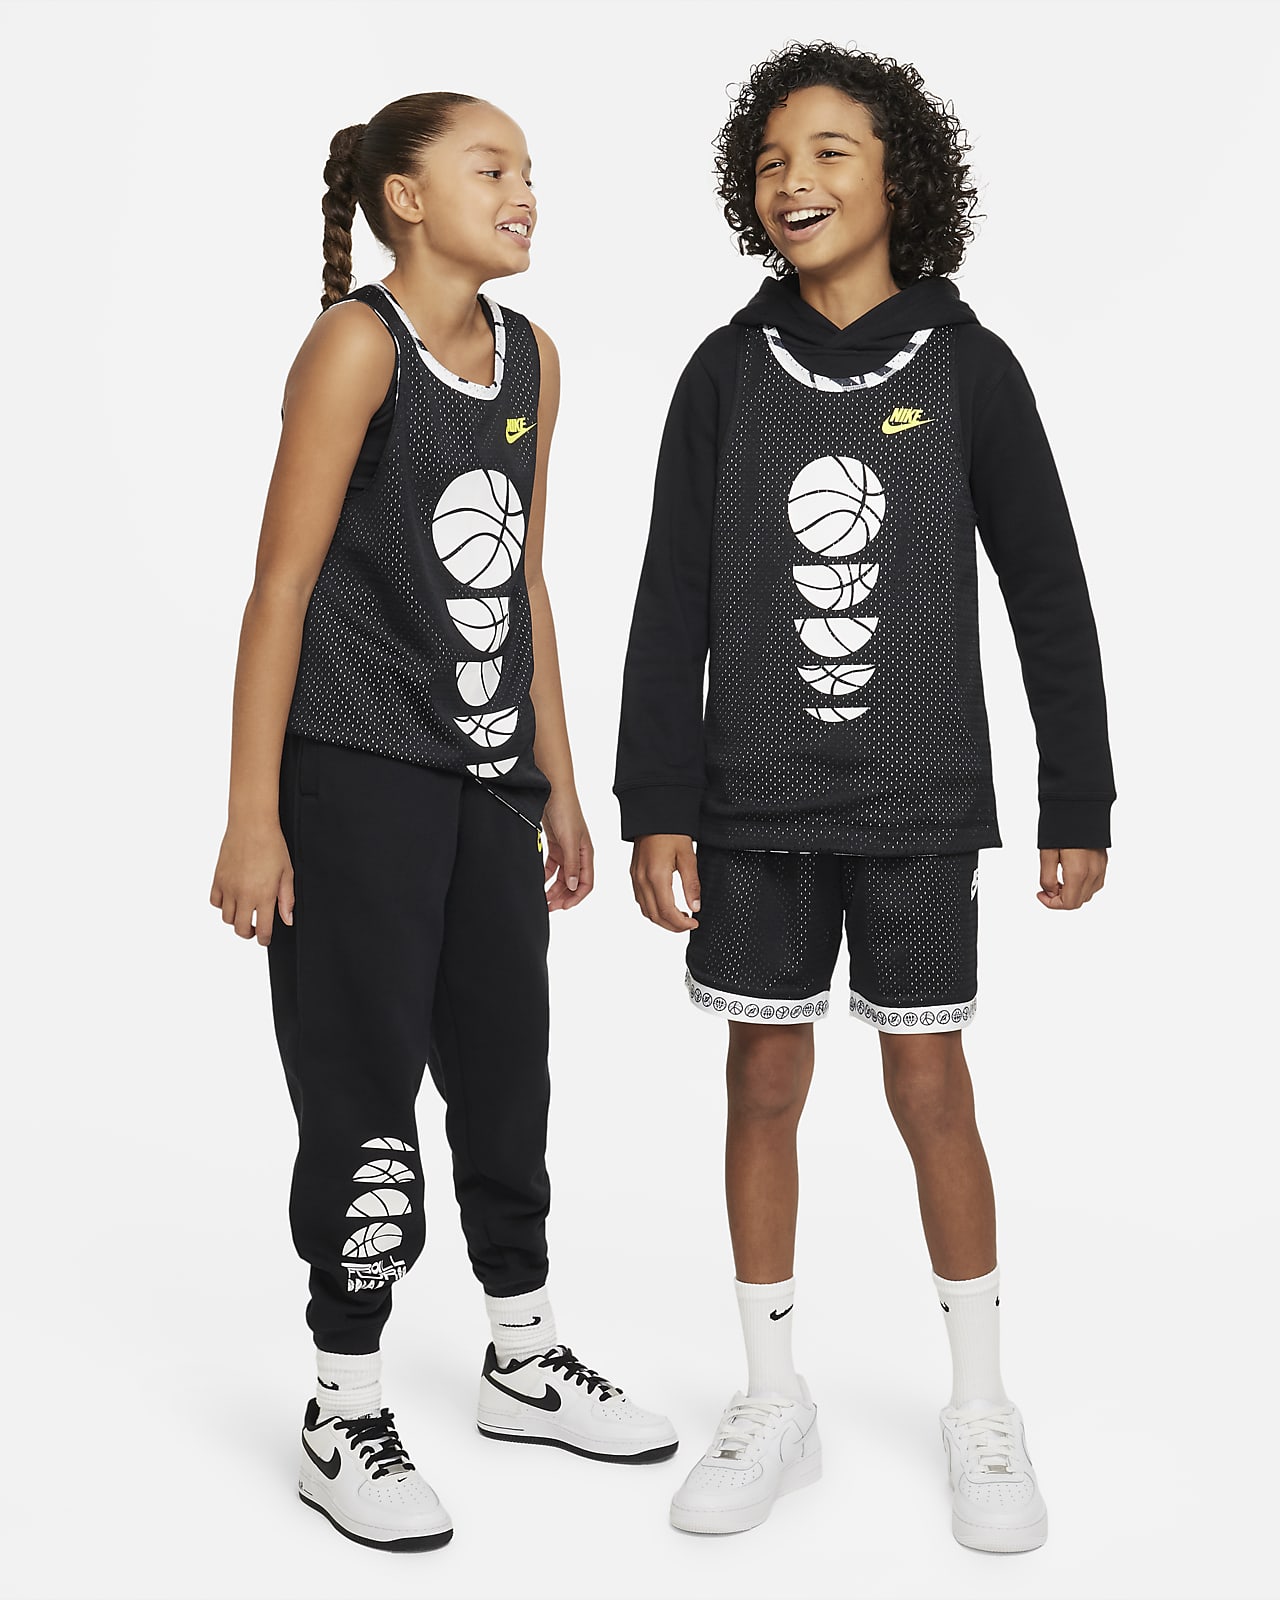 Nike Culture of Basketball Older Kids' Reversible Basketball Jersey ...